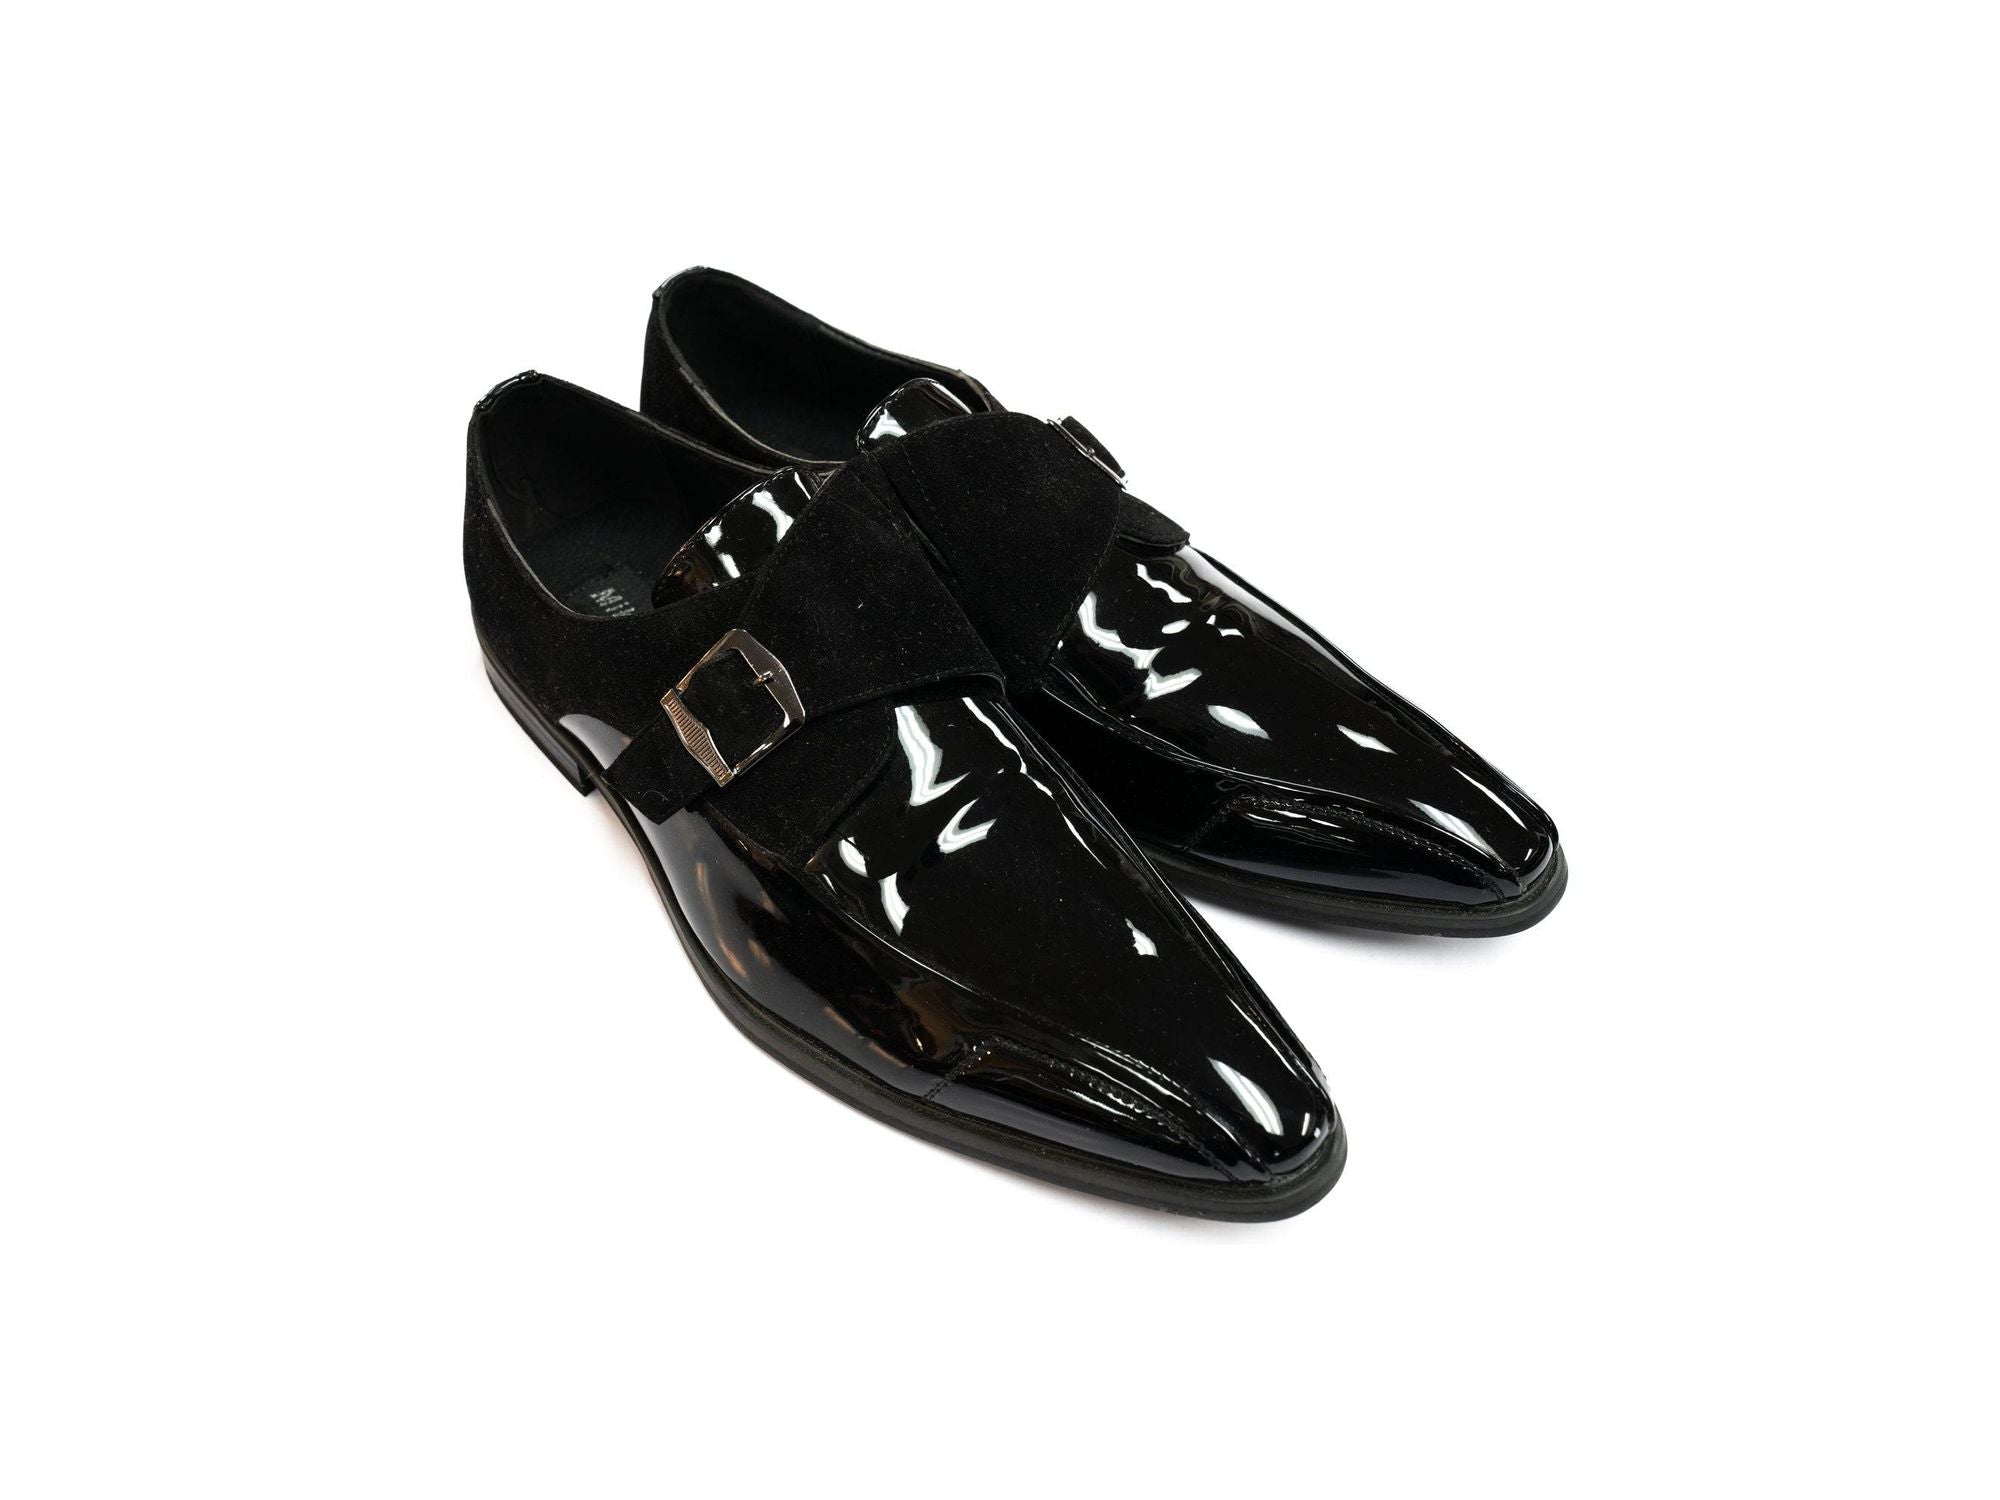 Miko Lotti Formal Monk Strap Shoe in Black - Rainwater's Men's Clothing and Tuxedo Rental